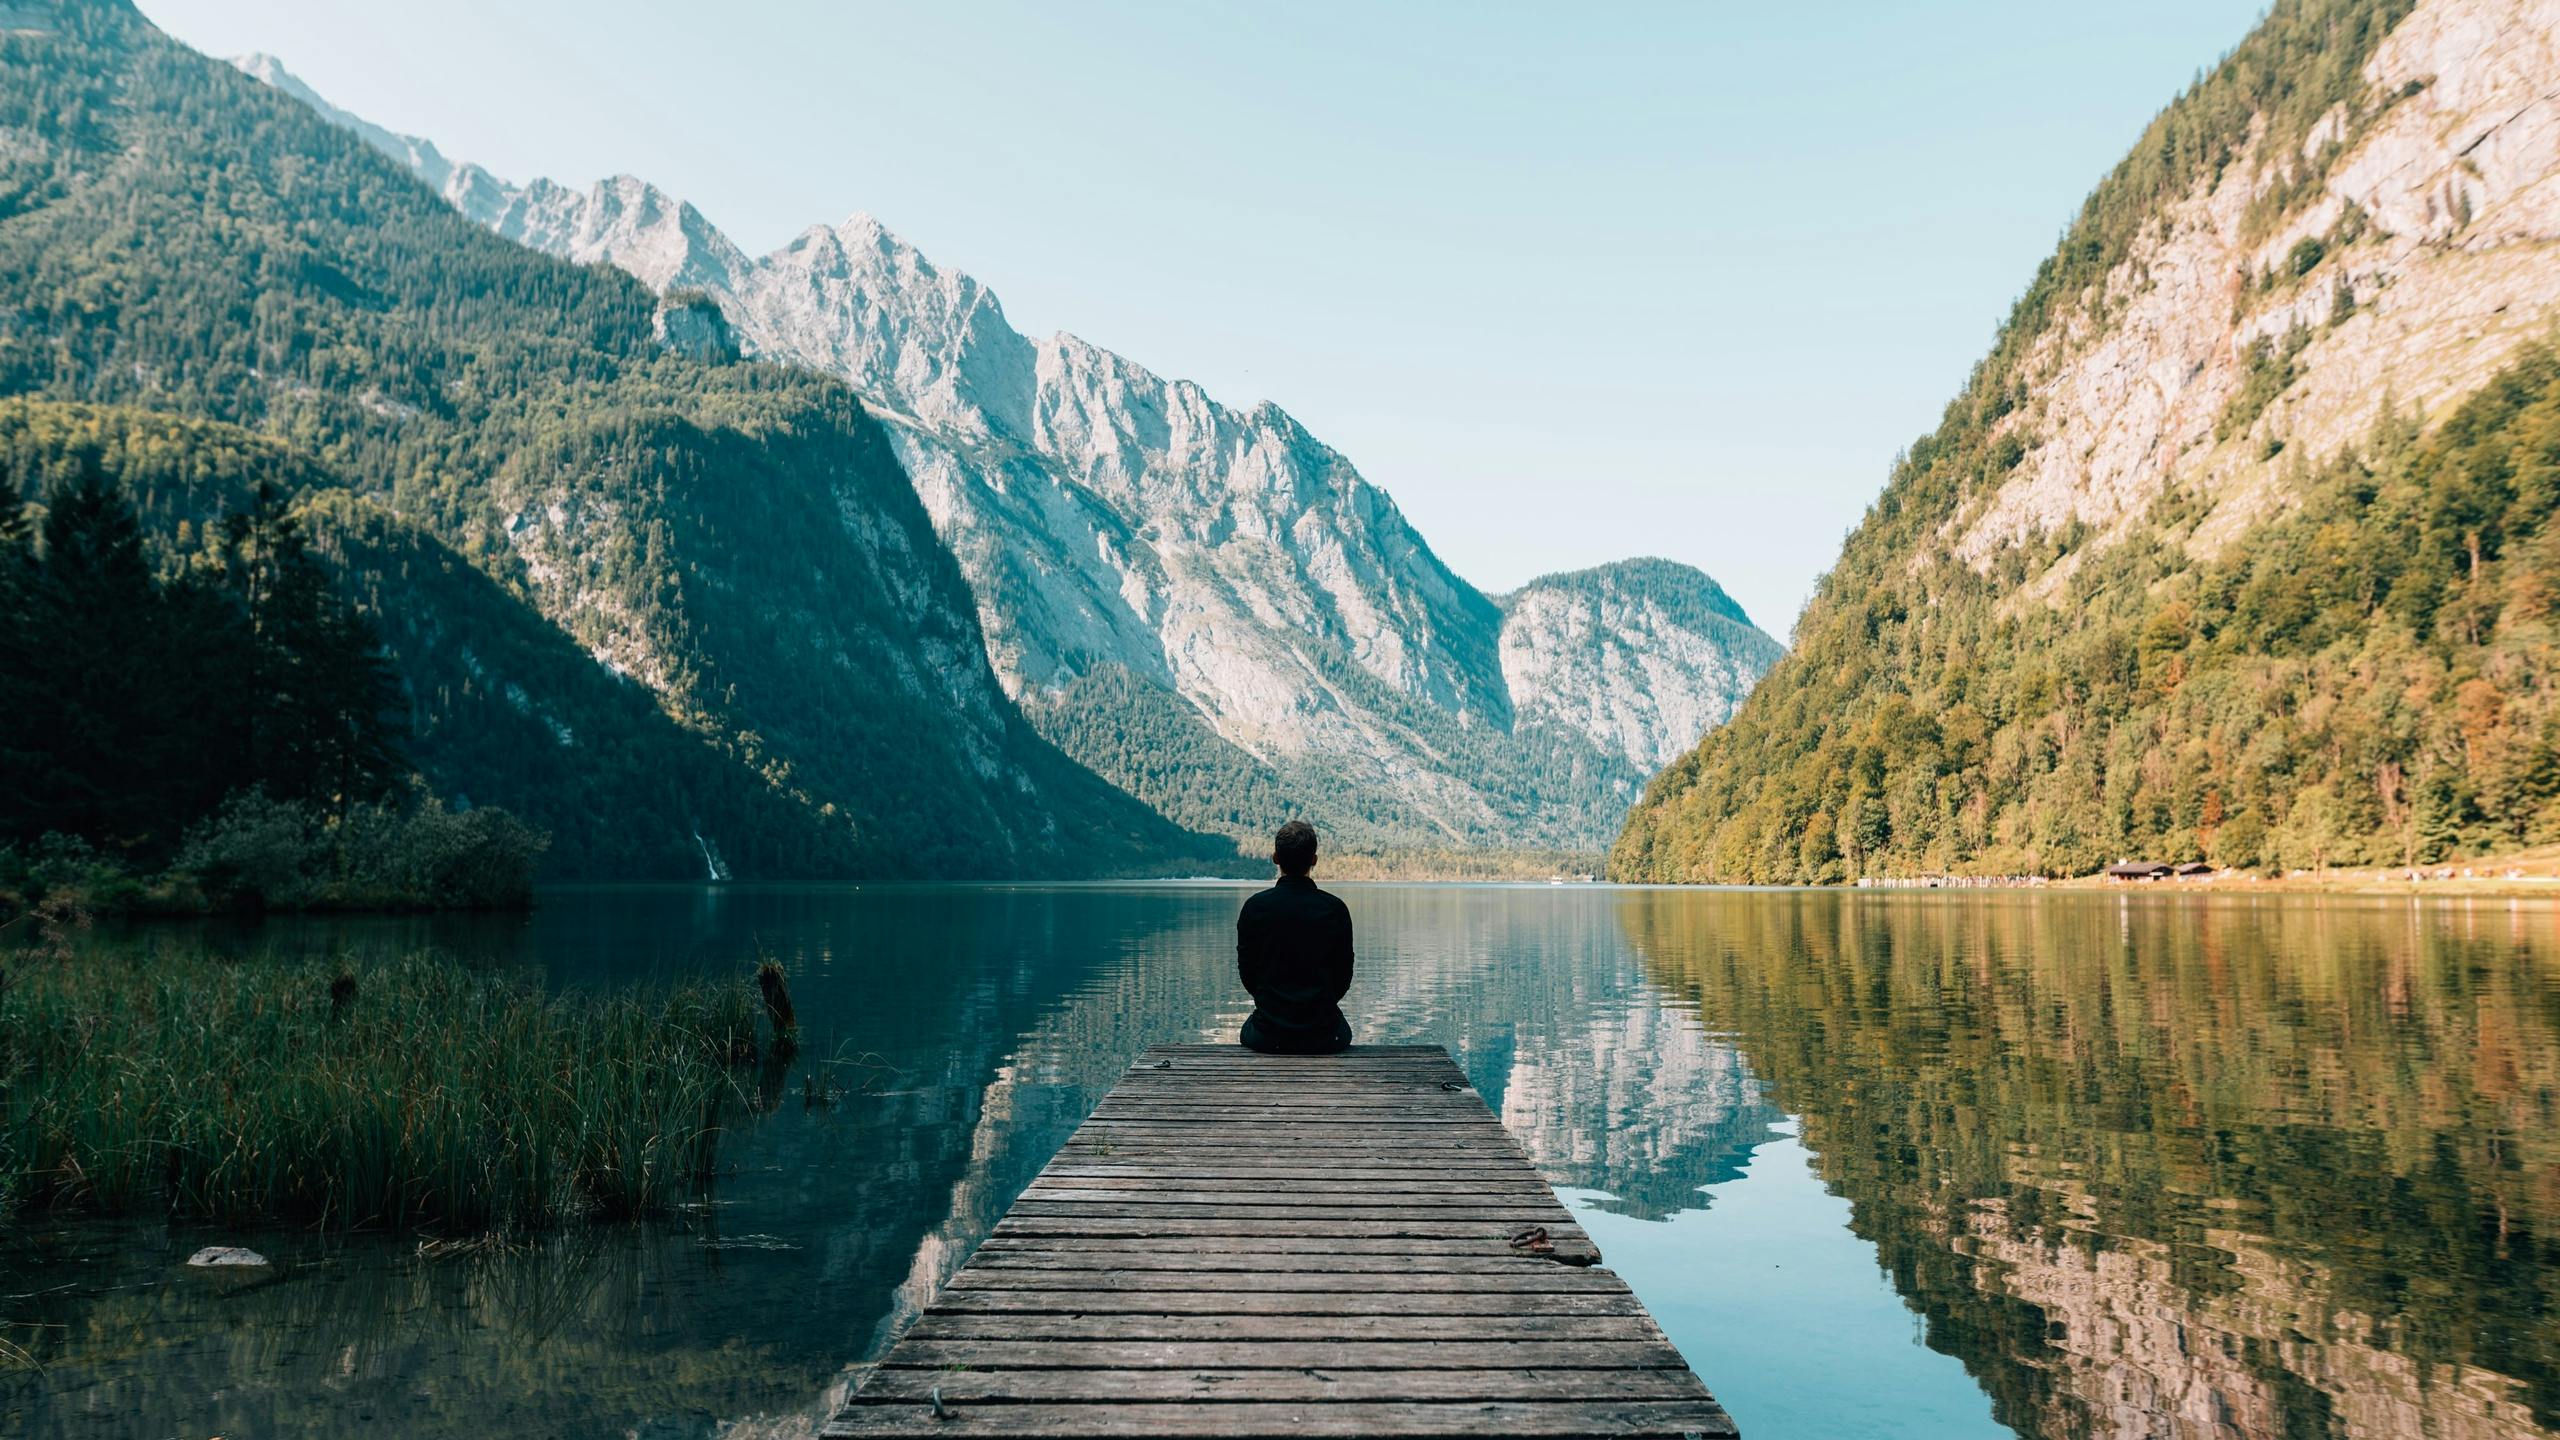 Man meditating while seated overlooking lake in mountainous region